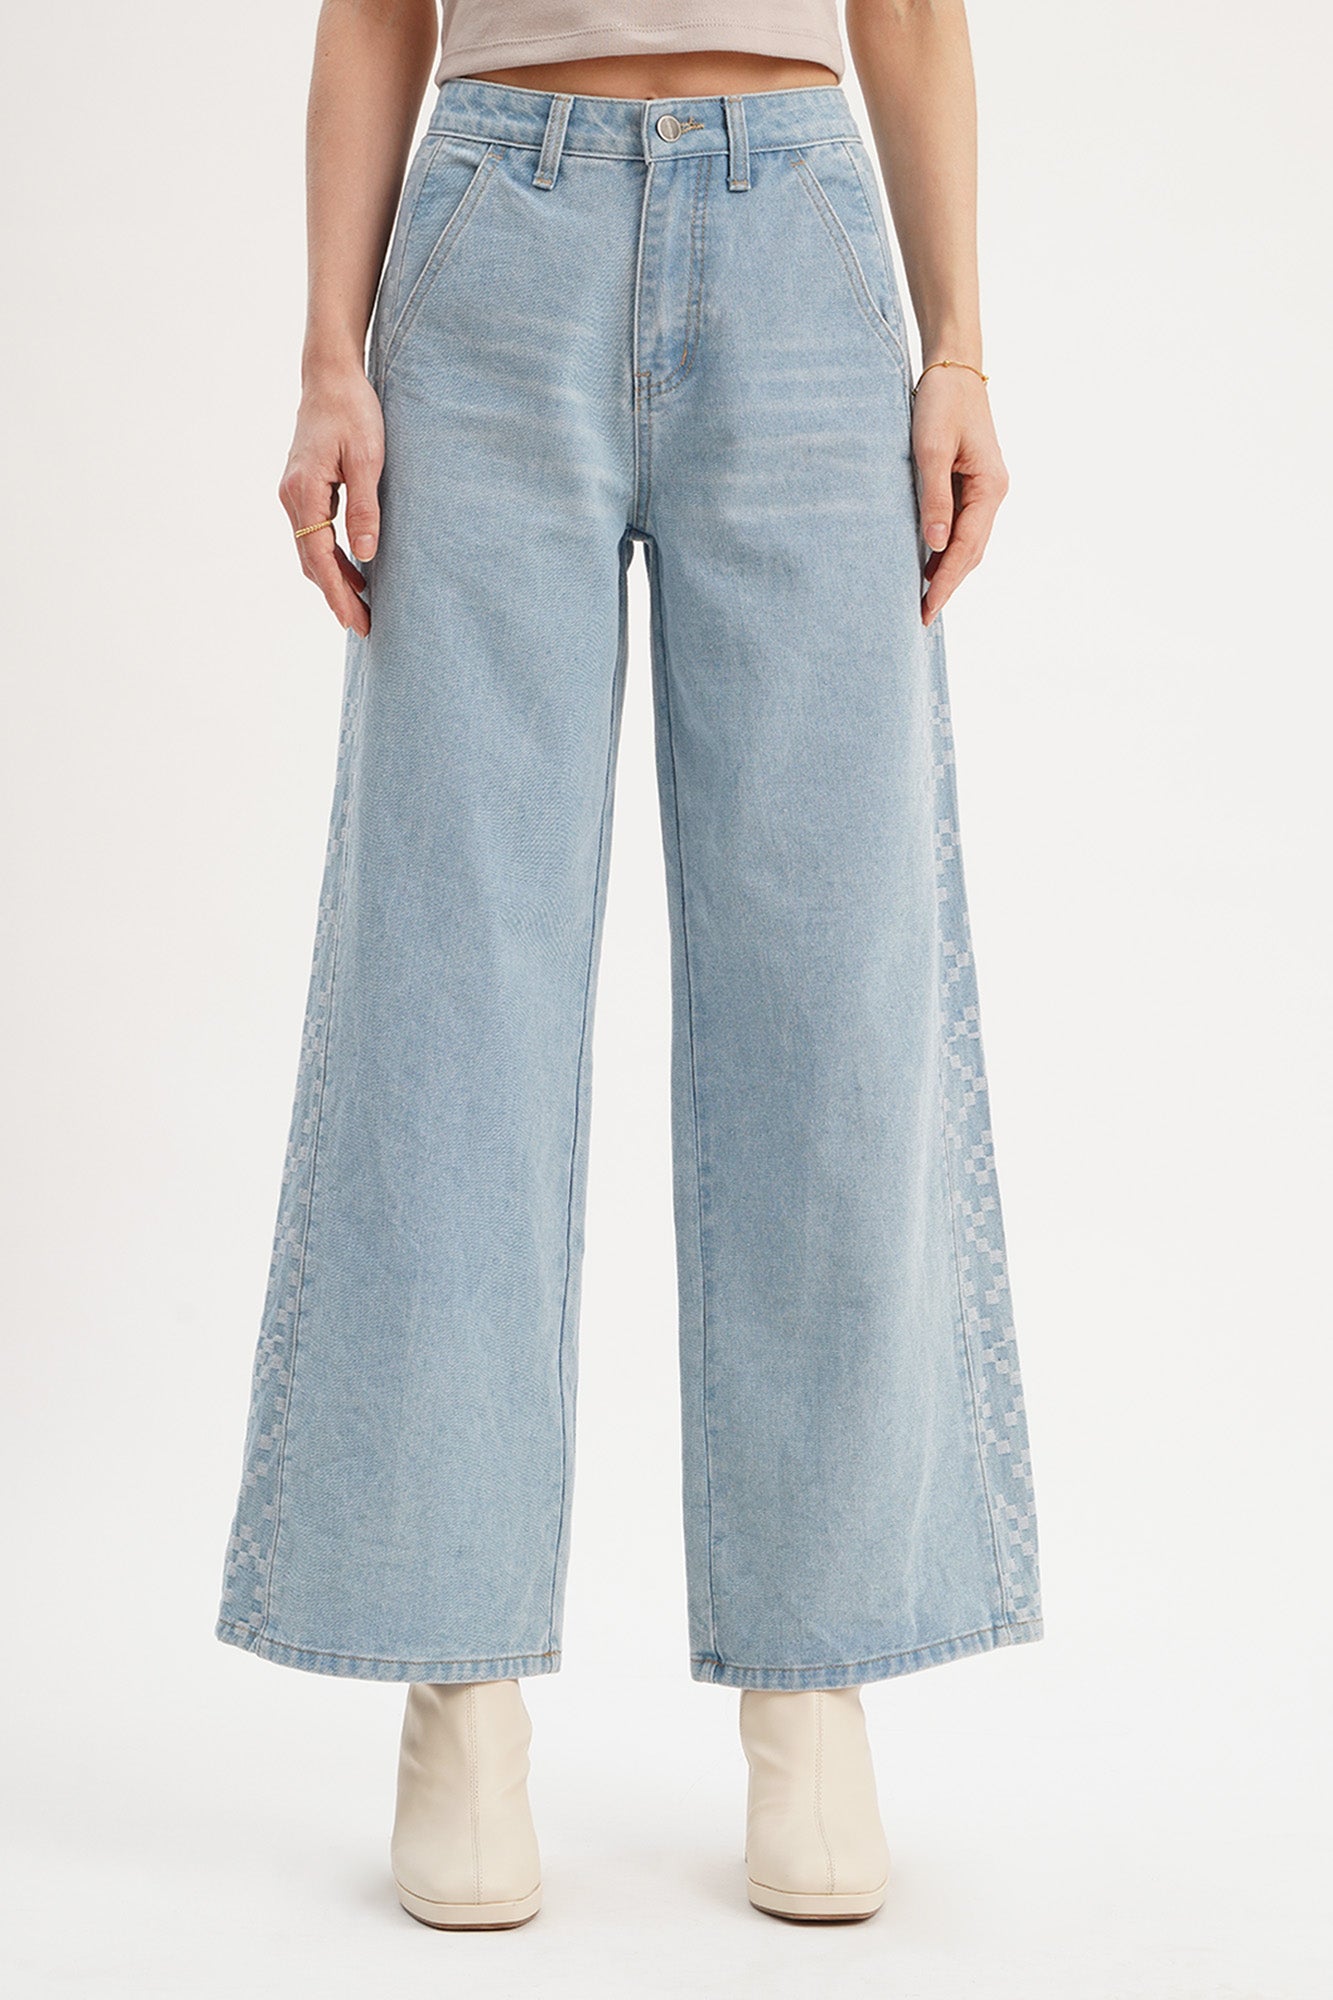 Buy Penshoppe Pants For Women Original Sale online | Lazada.com.ph